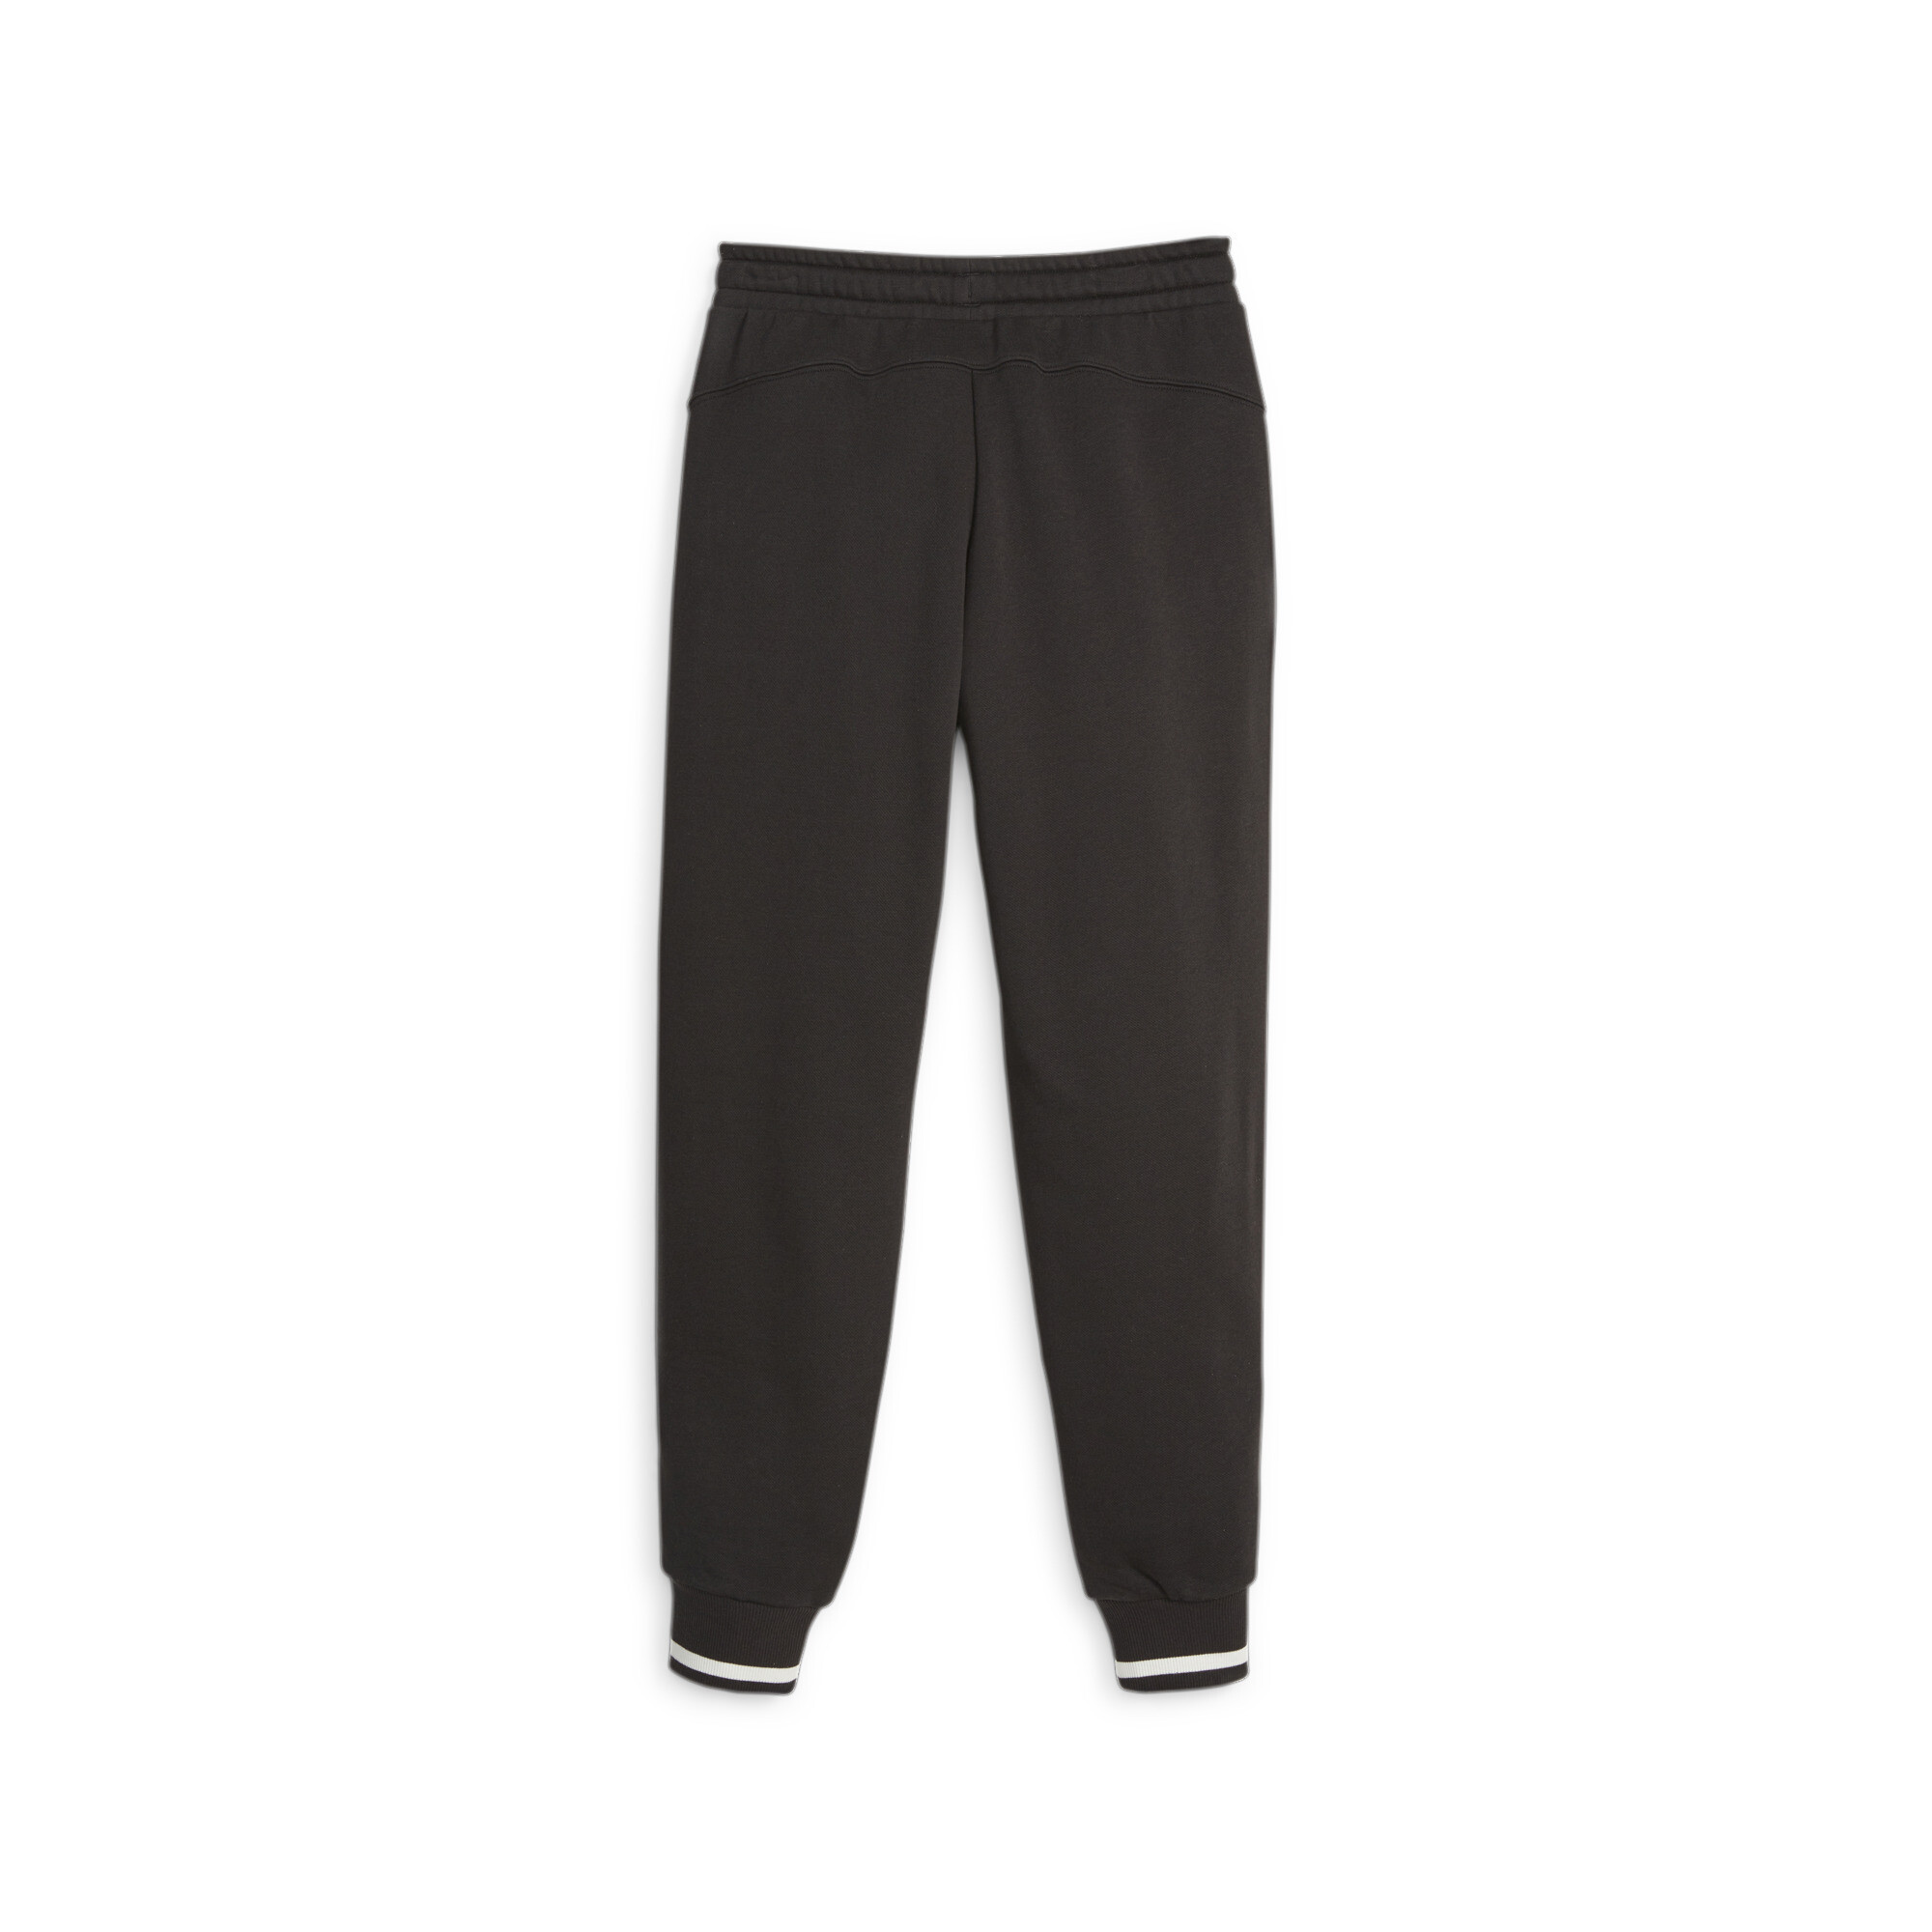 PUMA SQUAD Fleece Sweatpants In Black, Size 15-16 Youth